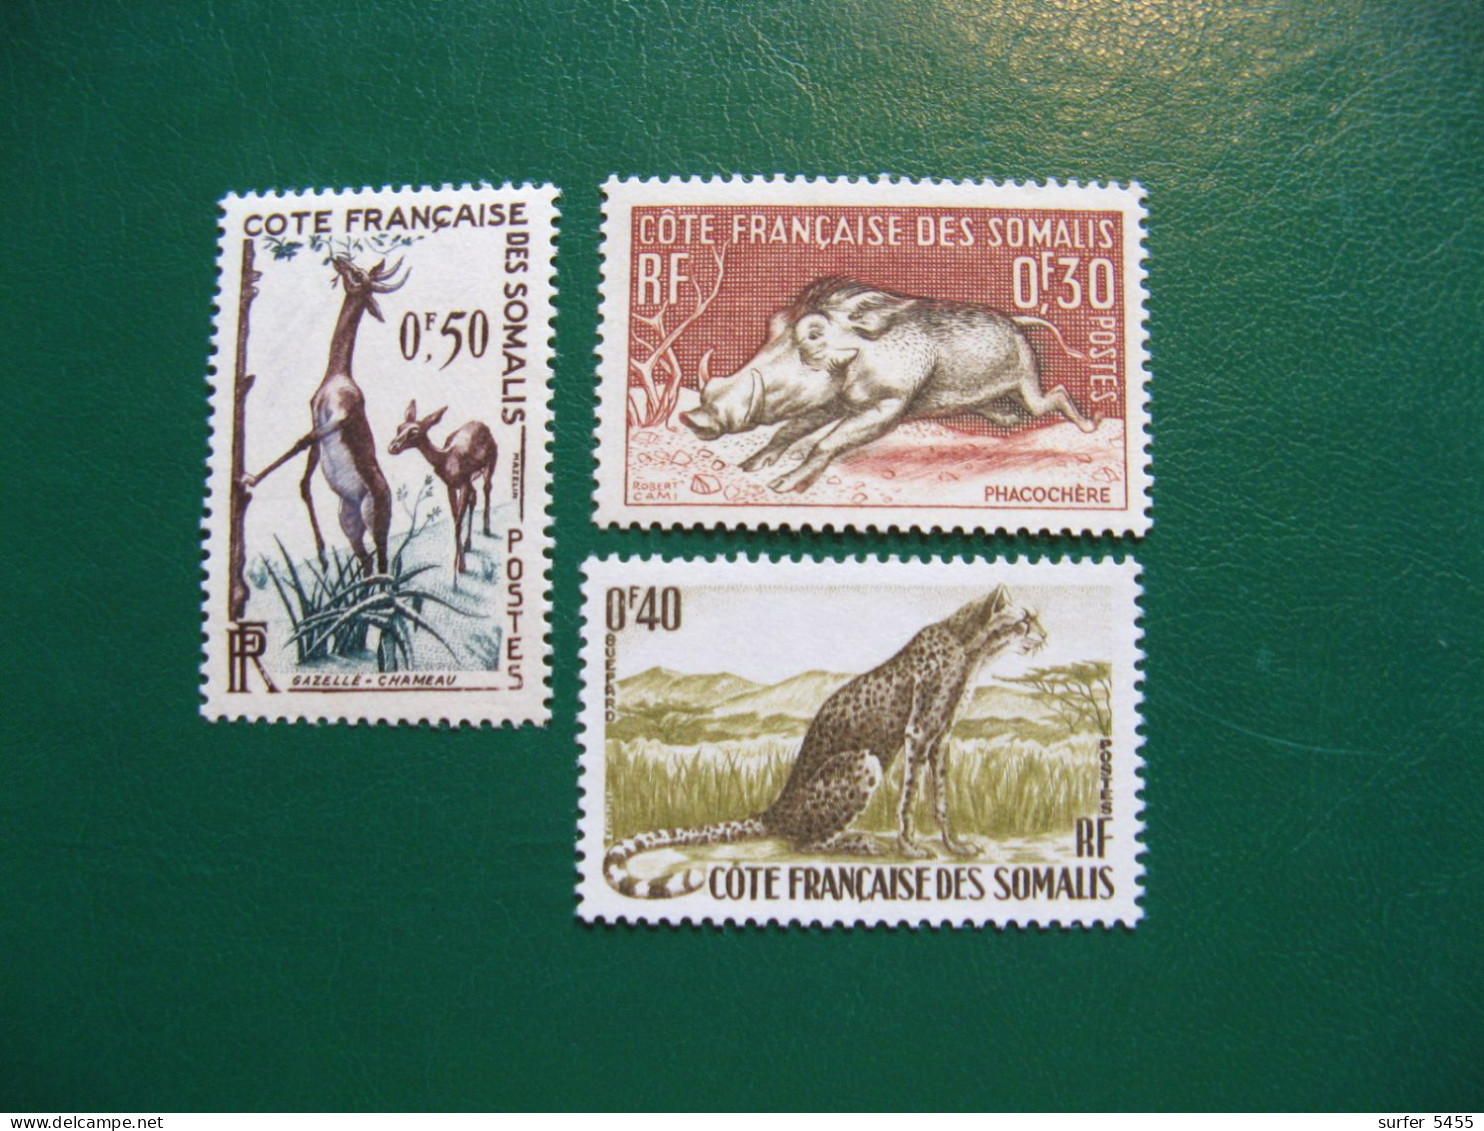 COTE DES SOMALIS - YVERT POSTE ORDINAIRE N° 287/289 - TIMBRES NEUFS** LUXE - MNH - COTE 5,00 EUROS - Unused Stamps